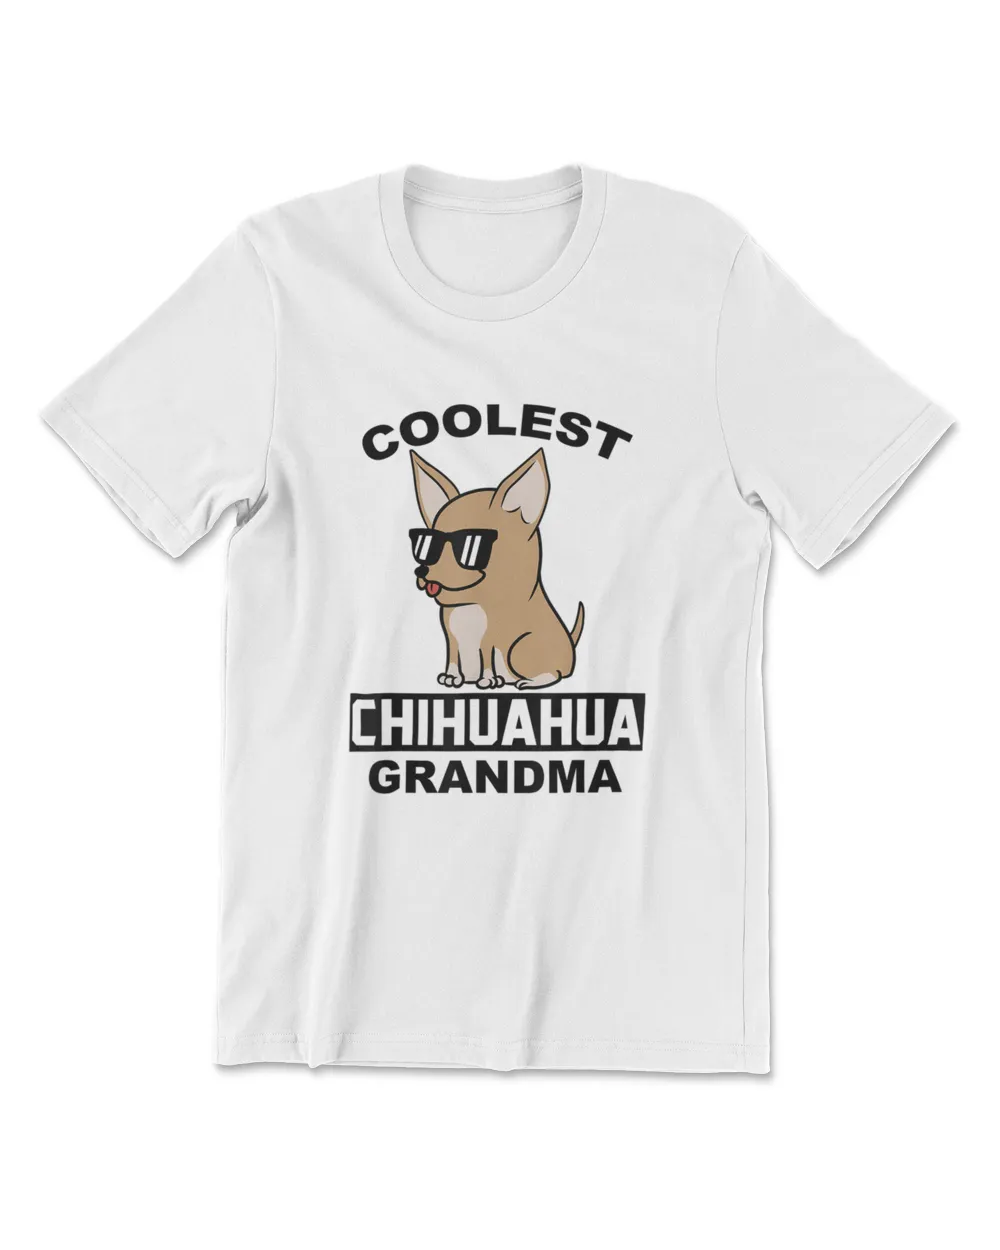 Coolest Chihuahua Grandma